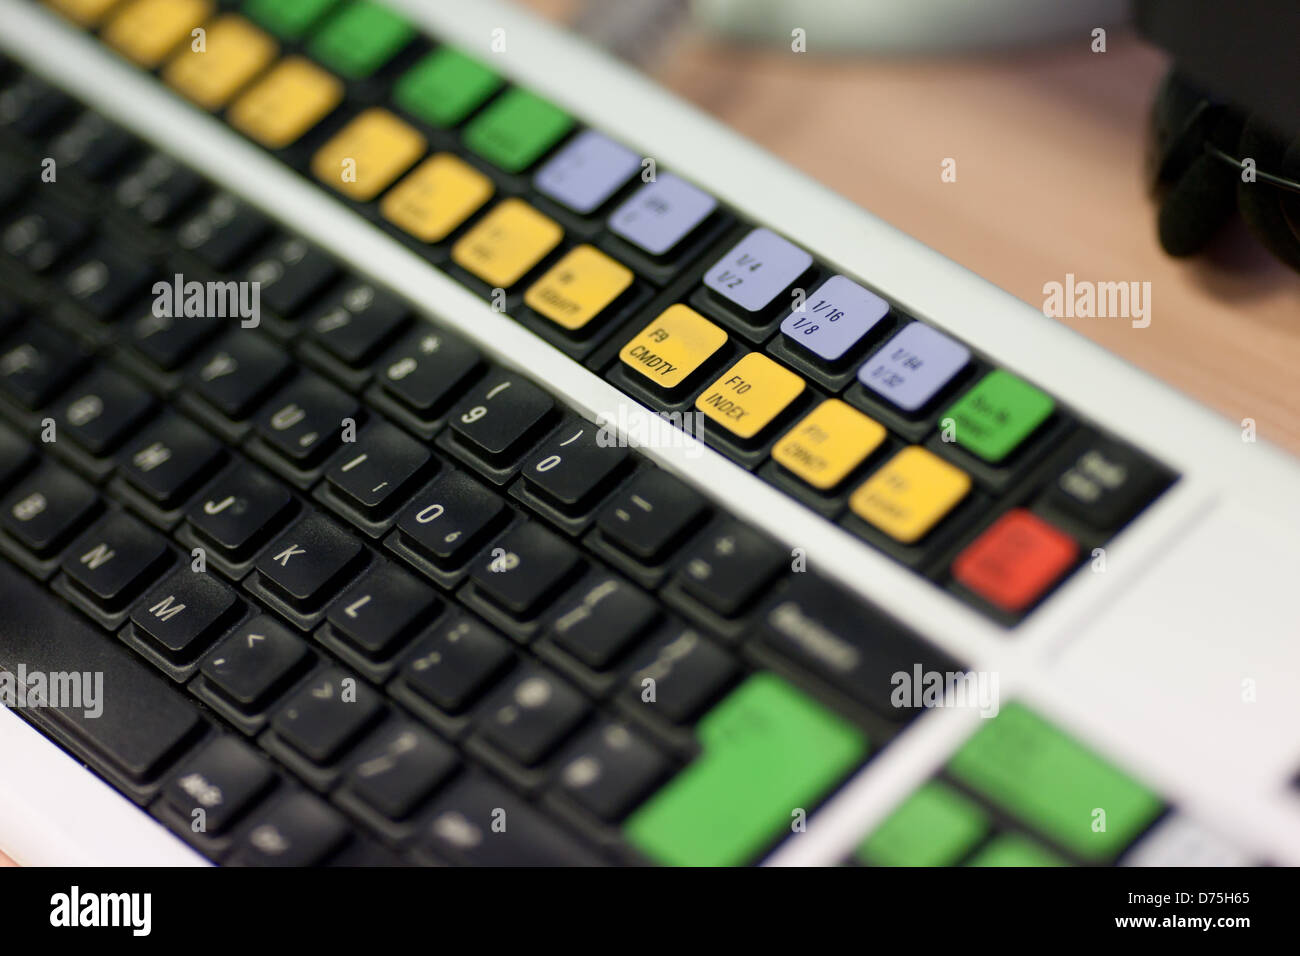 Bloomberg terminal keyboard stock market price information input Stock  Photo - Alamy